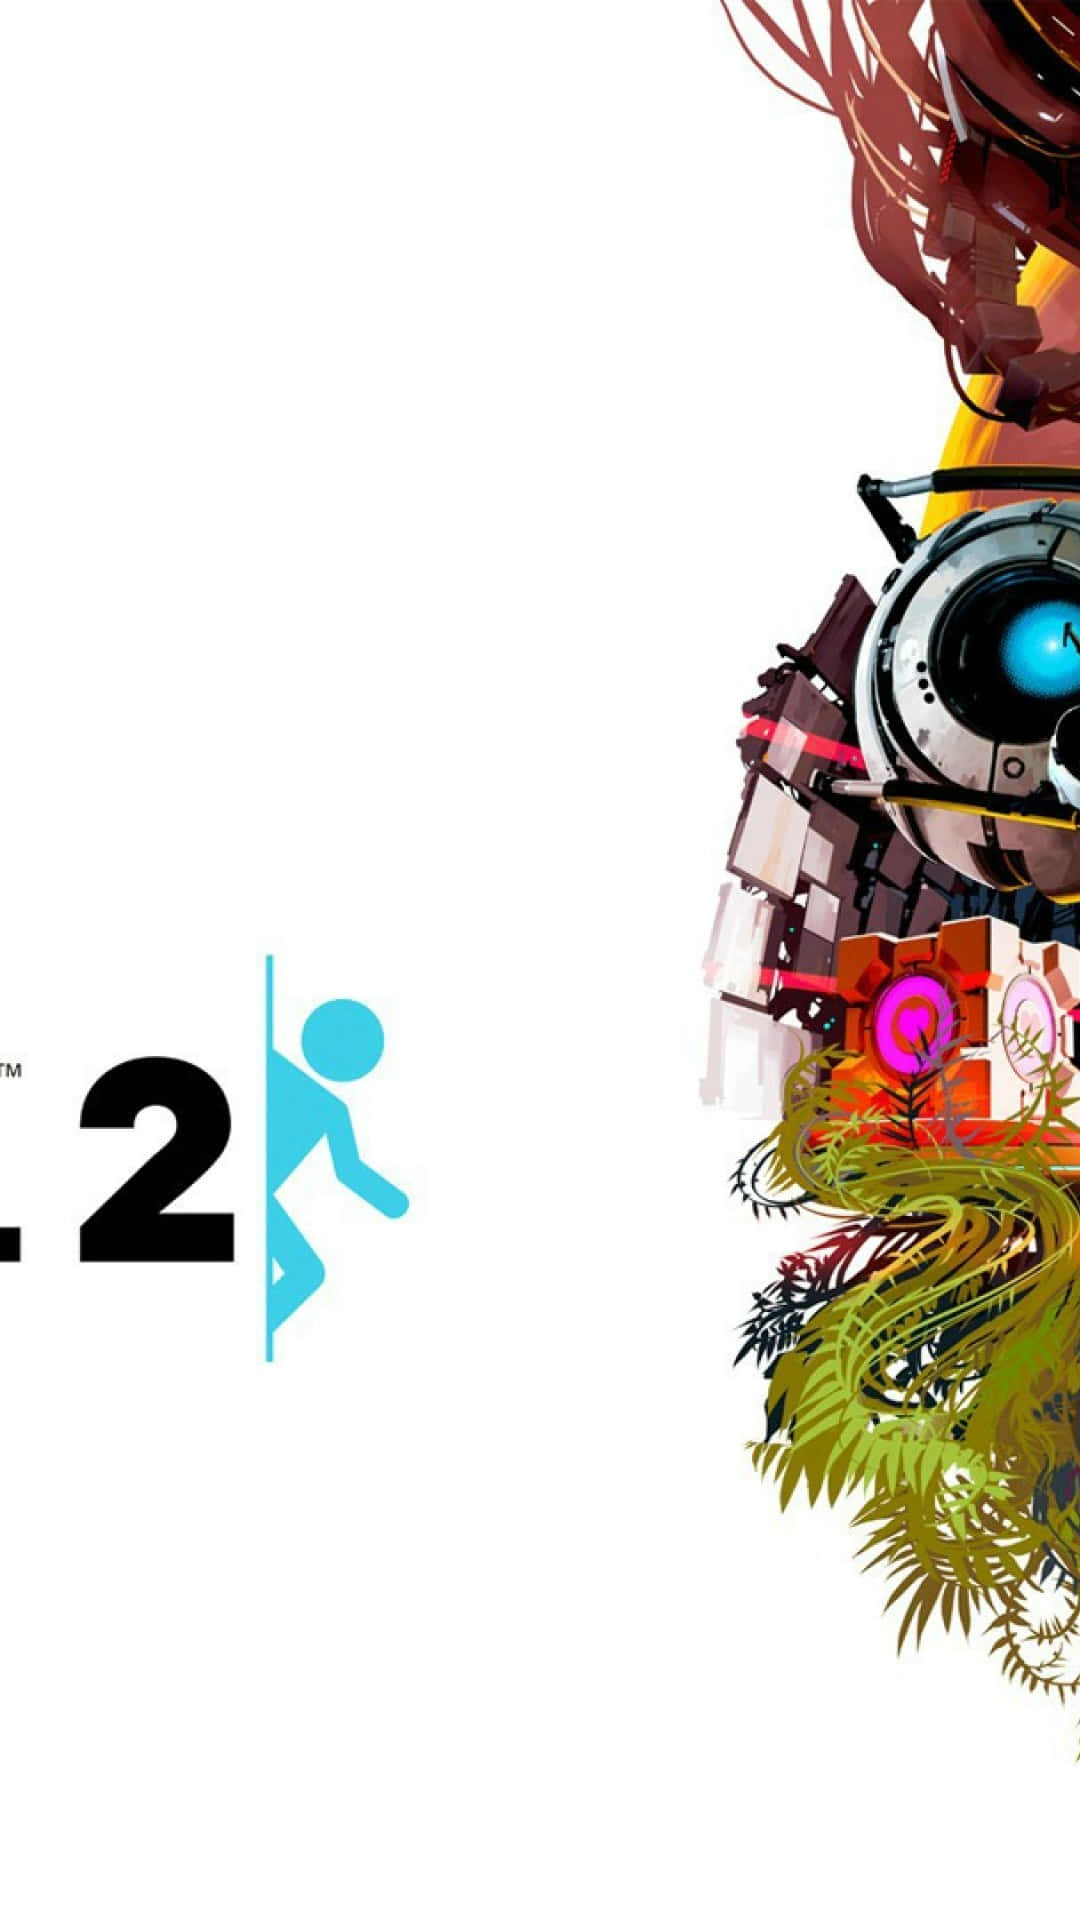 Pixel3 Portal 2 Bakgrund Robotar Höger Sida.